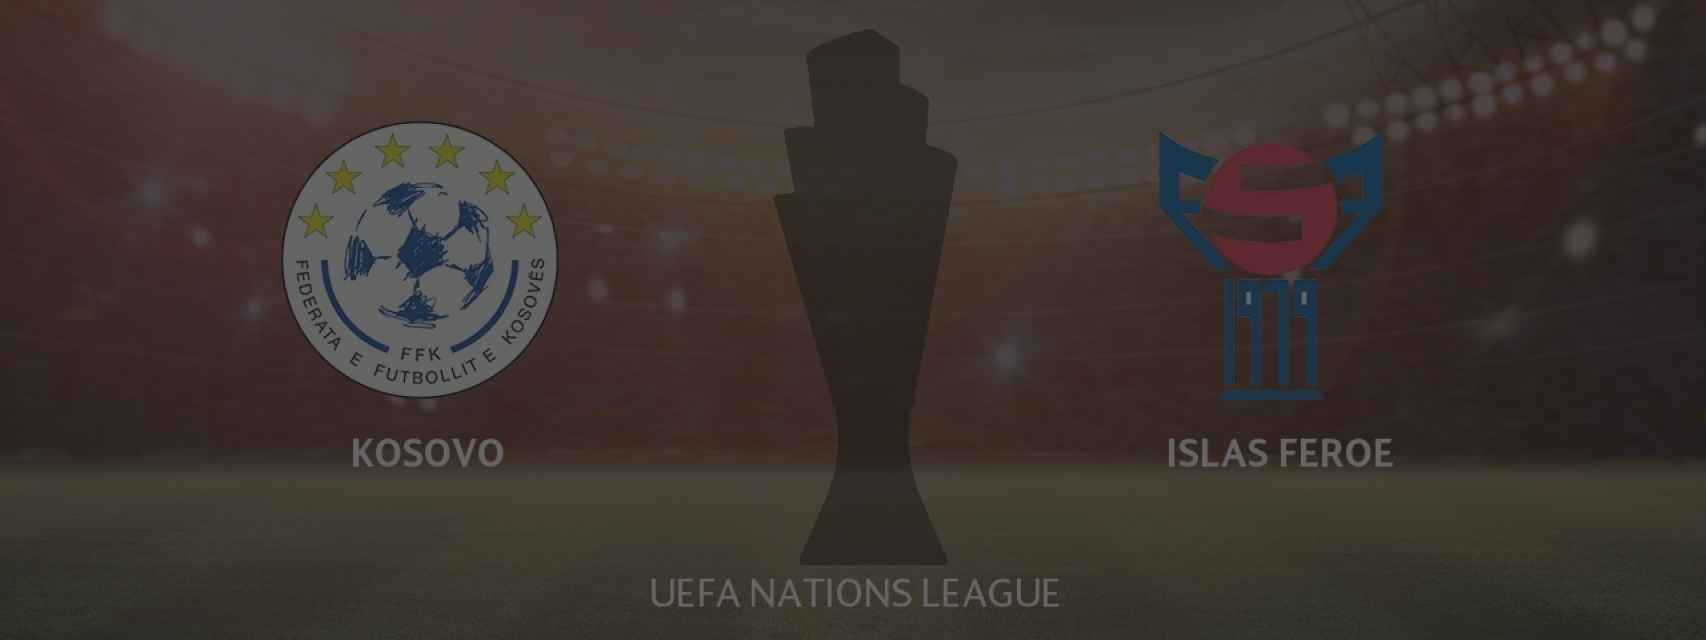 Kosovo - Islas Feroe, UEFA Nations League